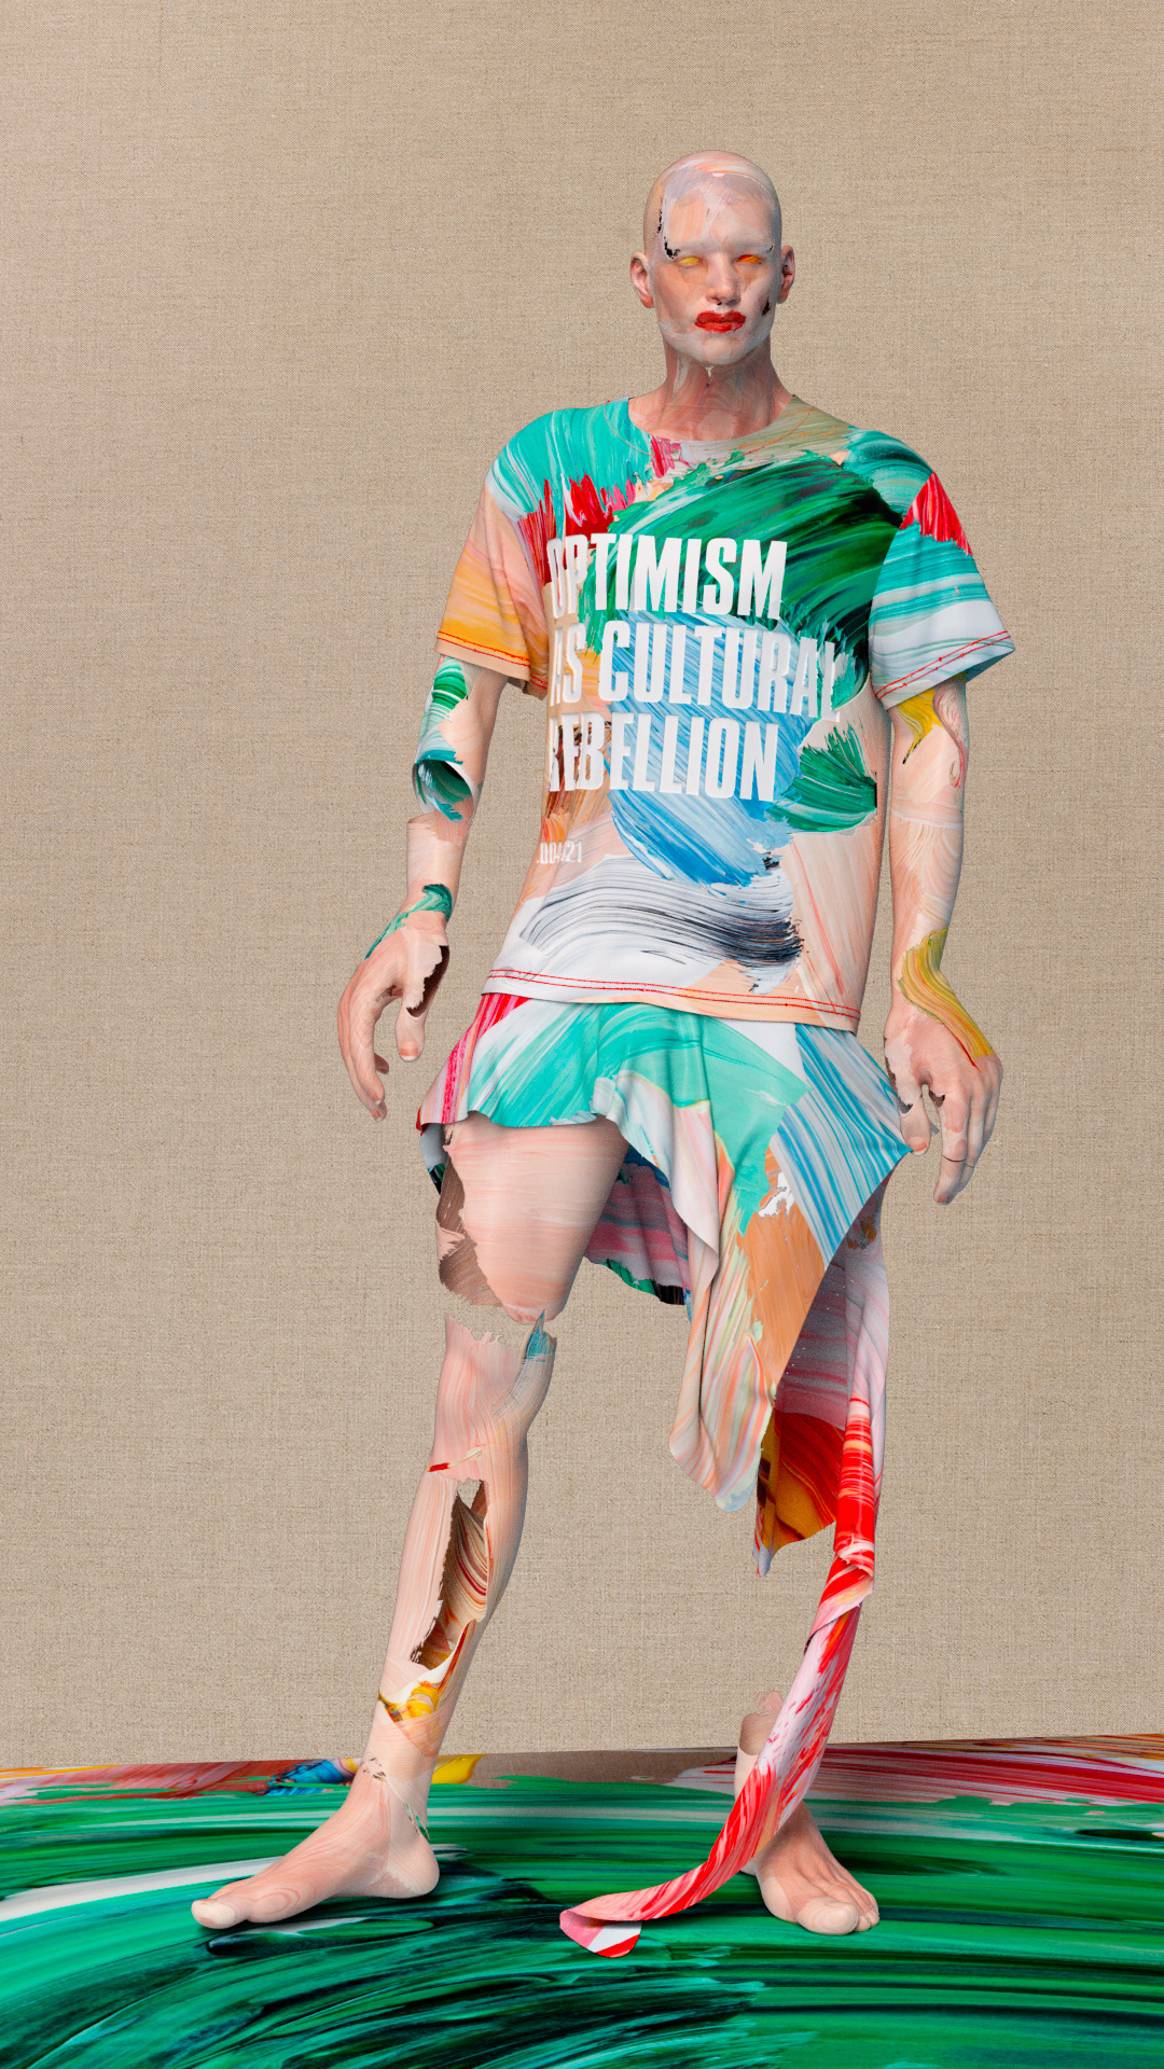 Bild: Optimism as Cultural Rebellion 2004-2021 T-Shirt & Skirt by Matthew Stone